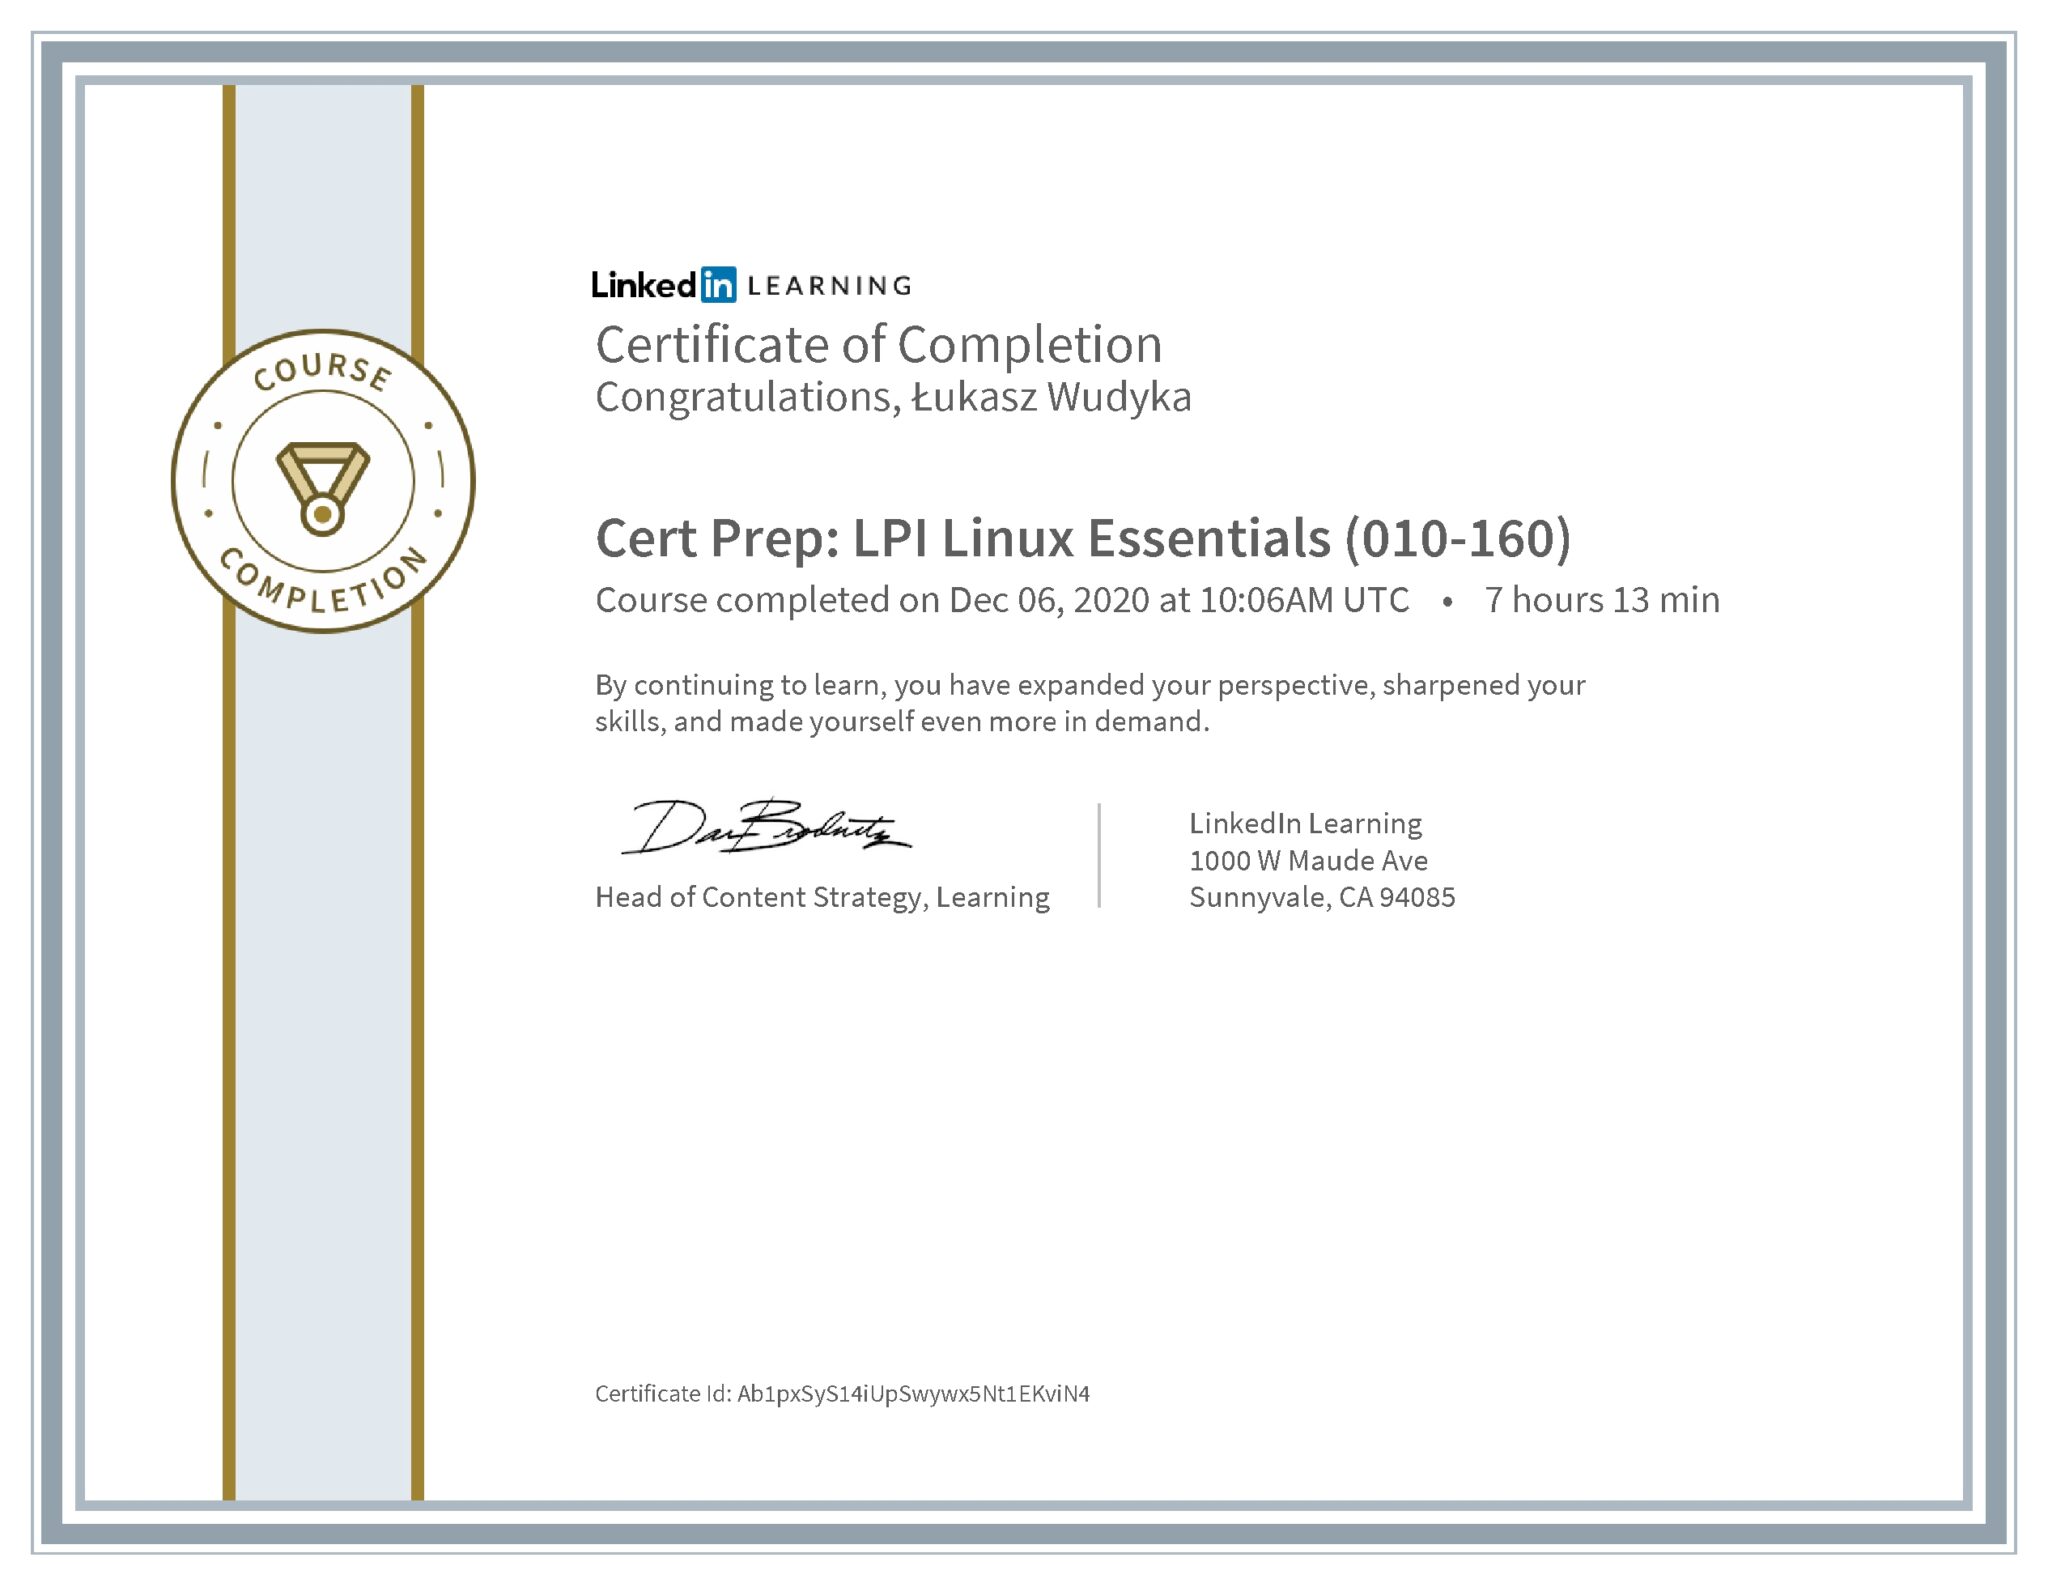 Łukasz Wudyka certyfikat LinkedIn Cert Prep: LPI Linux Essentials (010-160)